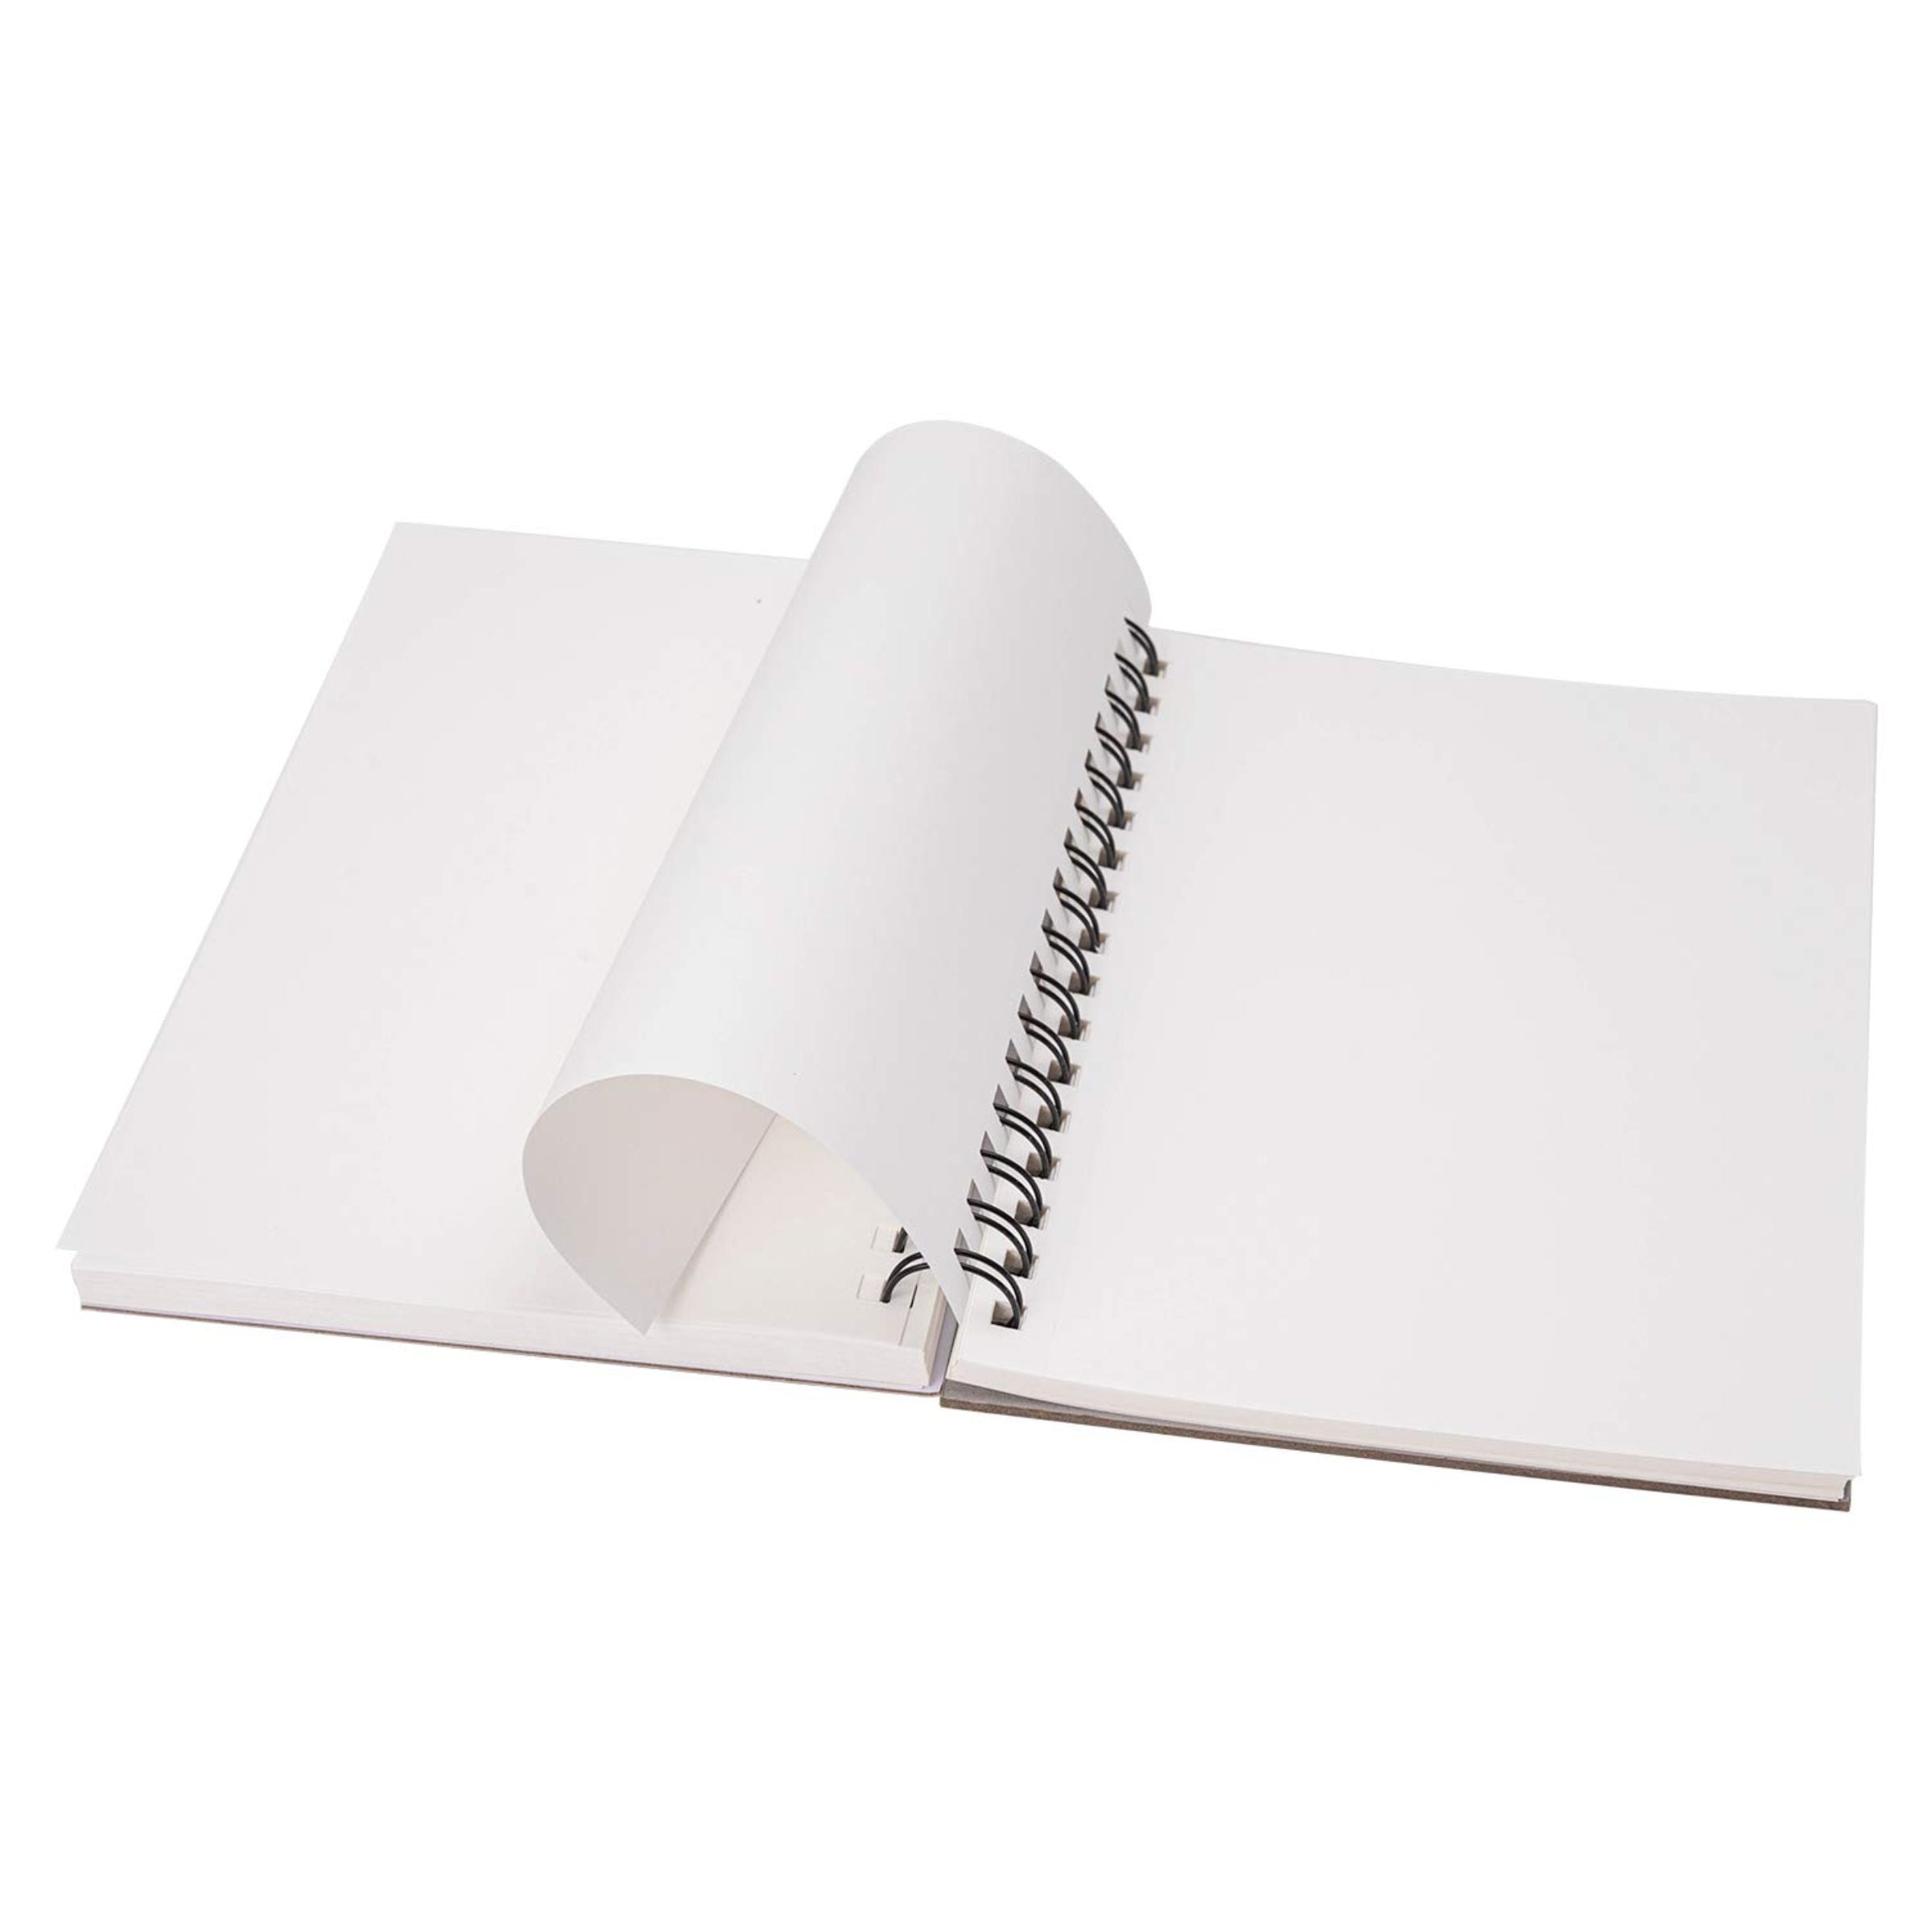 Superb Board Journal Hard Binding Spiral Sketchbook A5